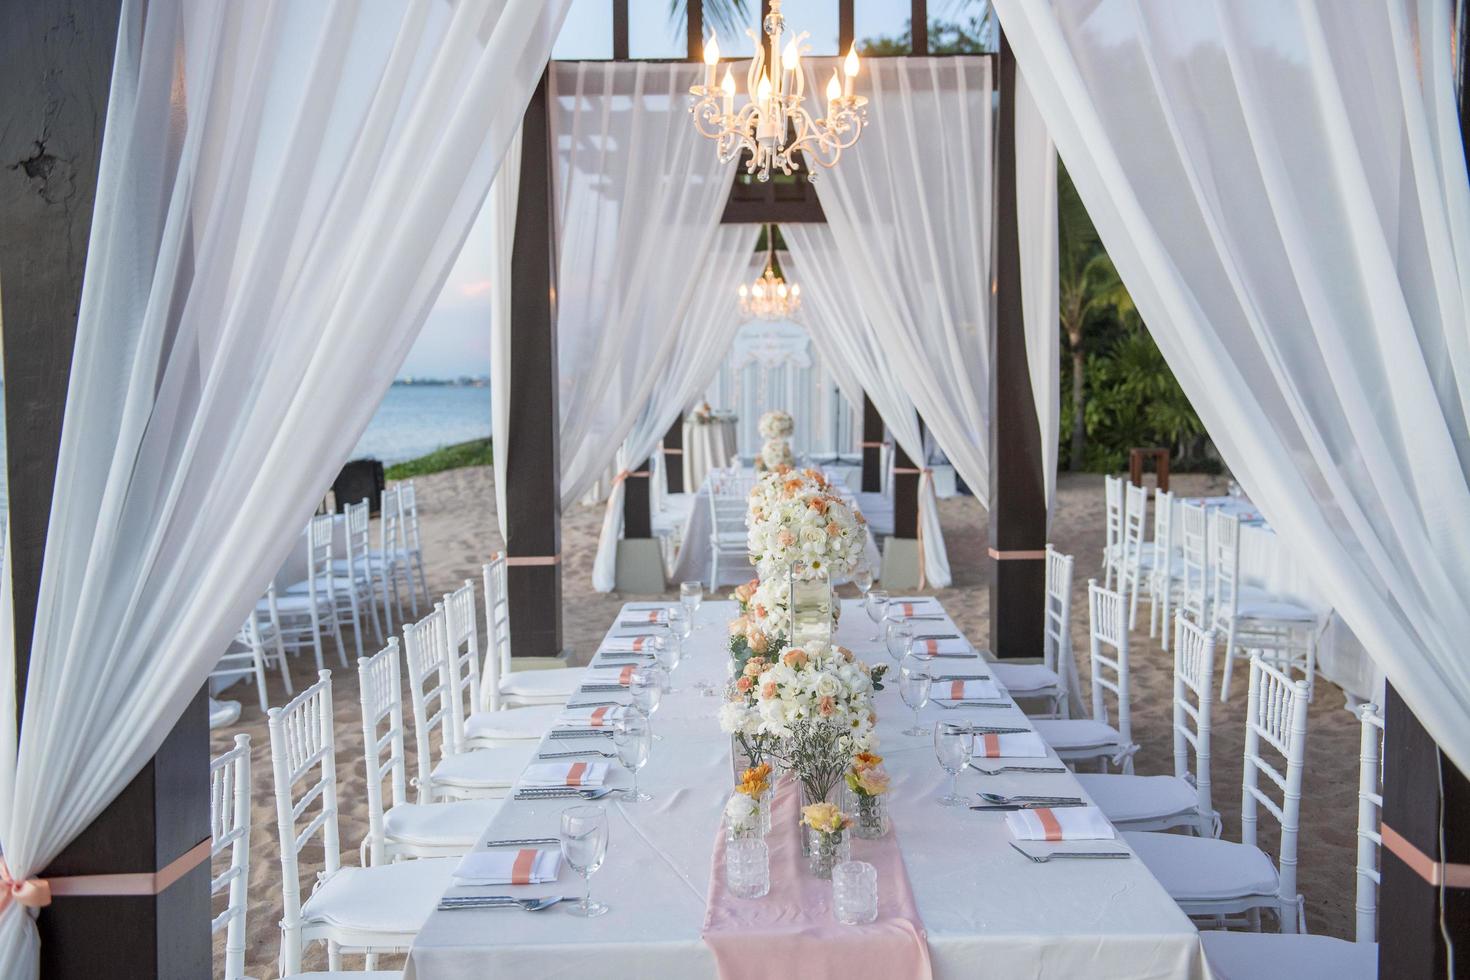 The elegant dinner table on the beach photo